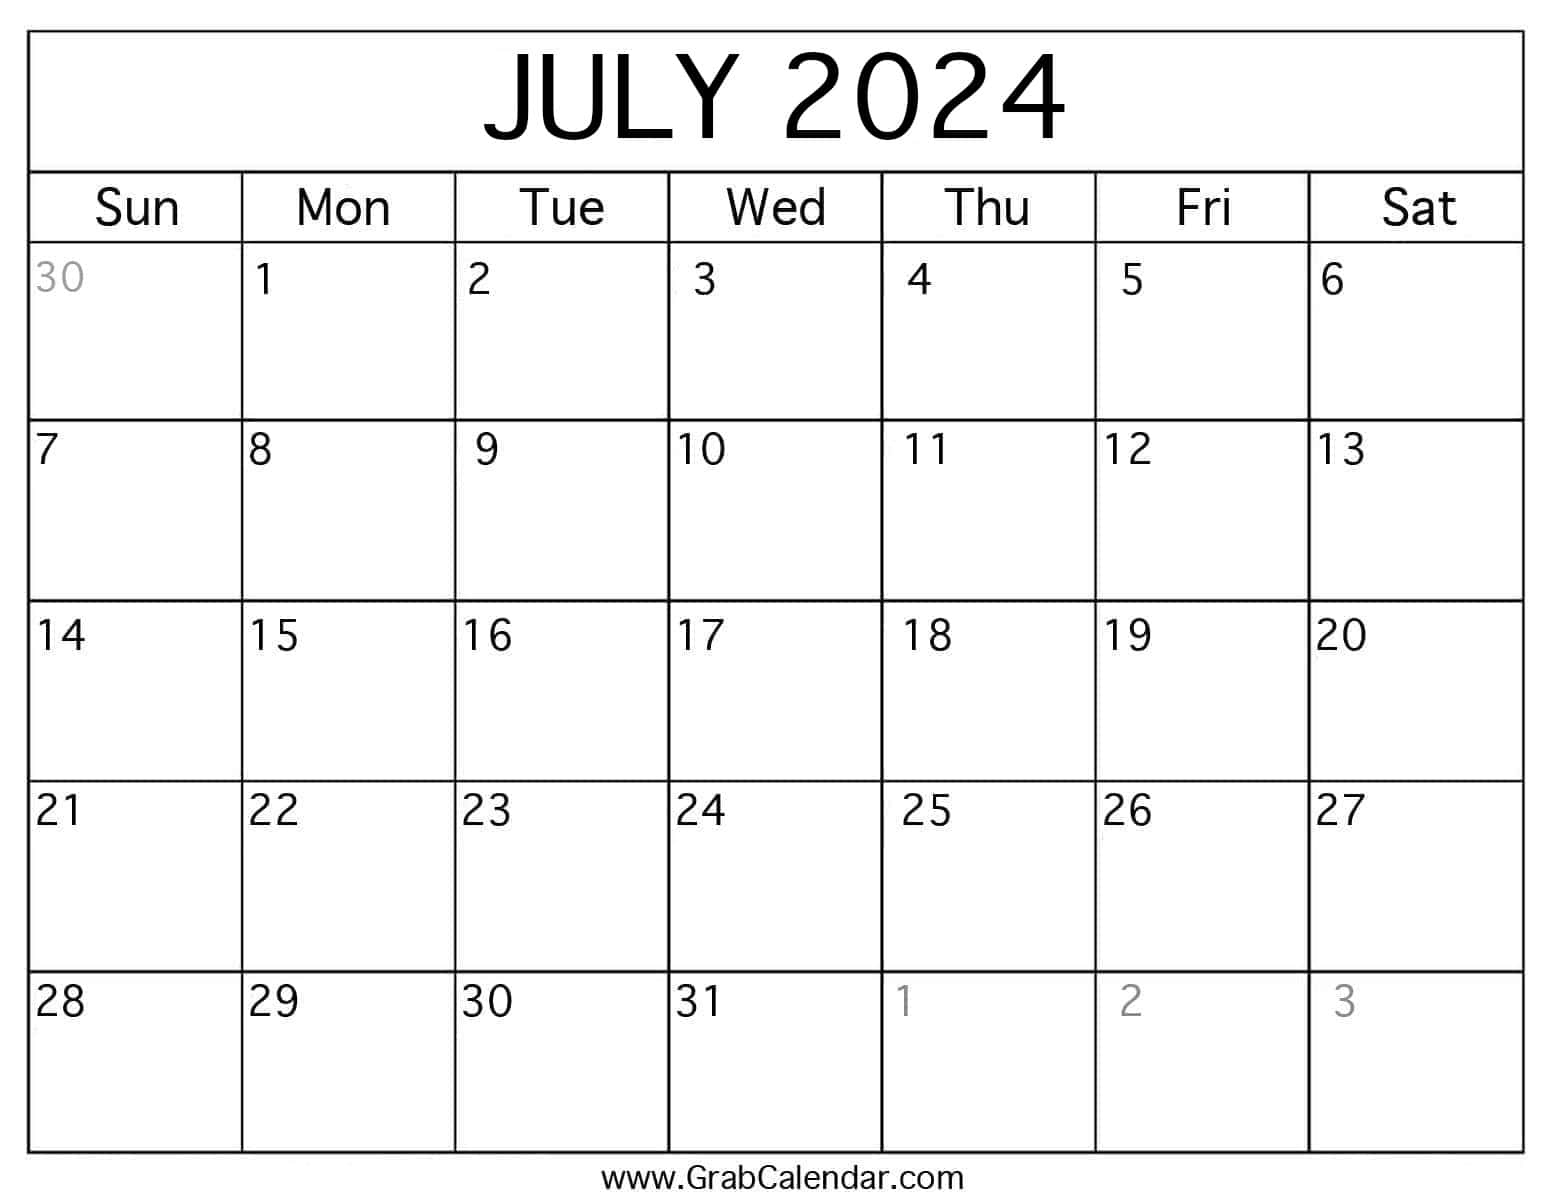 Printable July 2024 Calendar | Let Me See The Calendar For July 2024